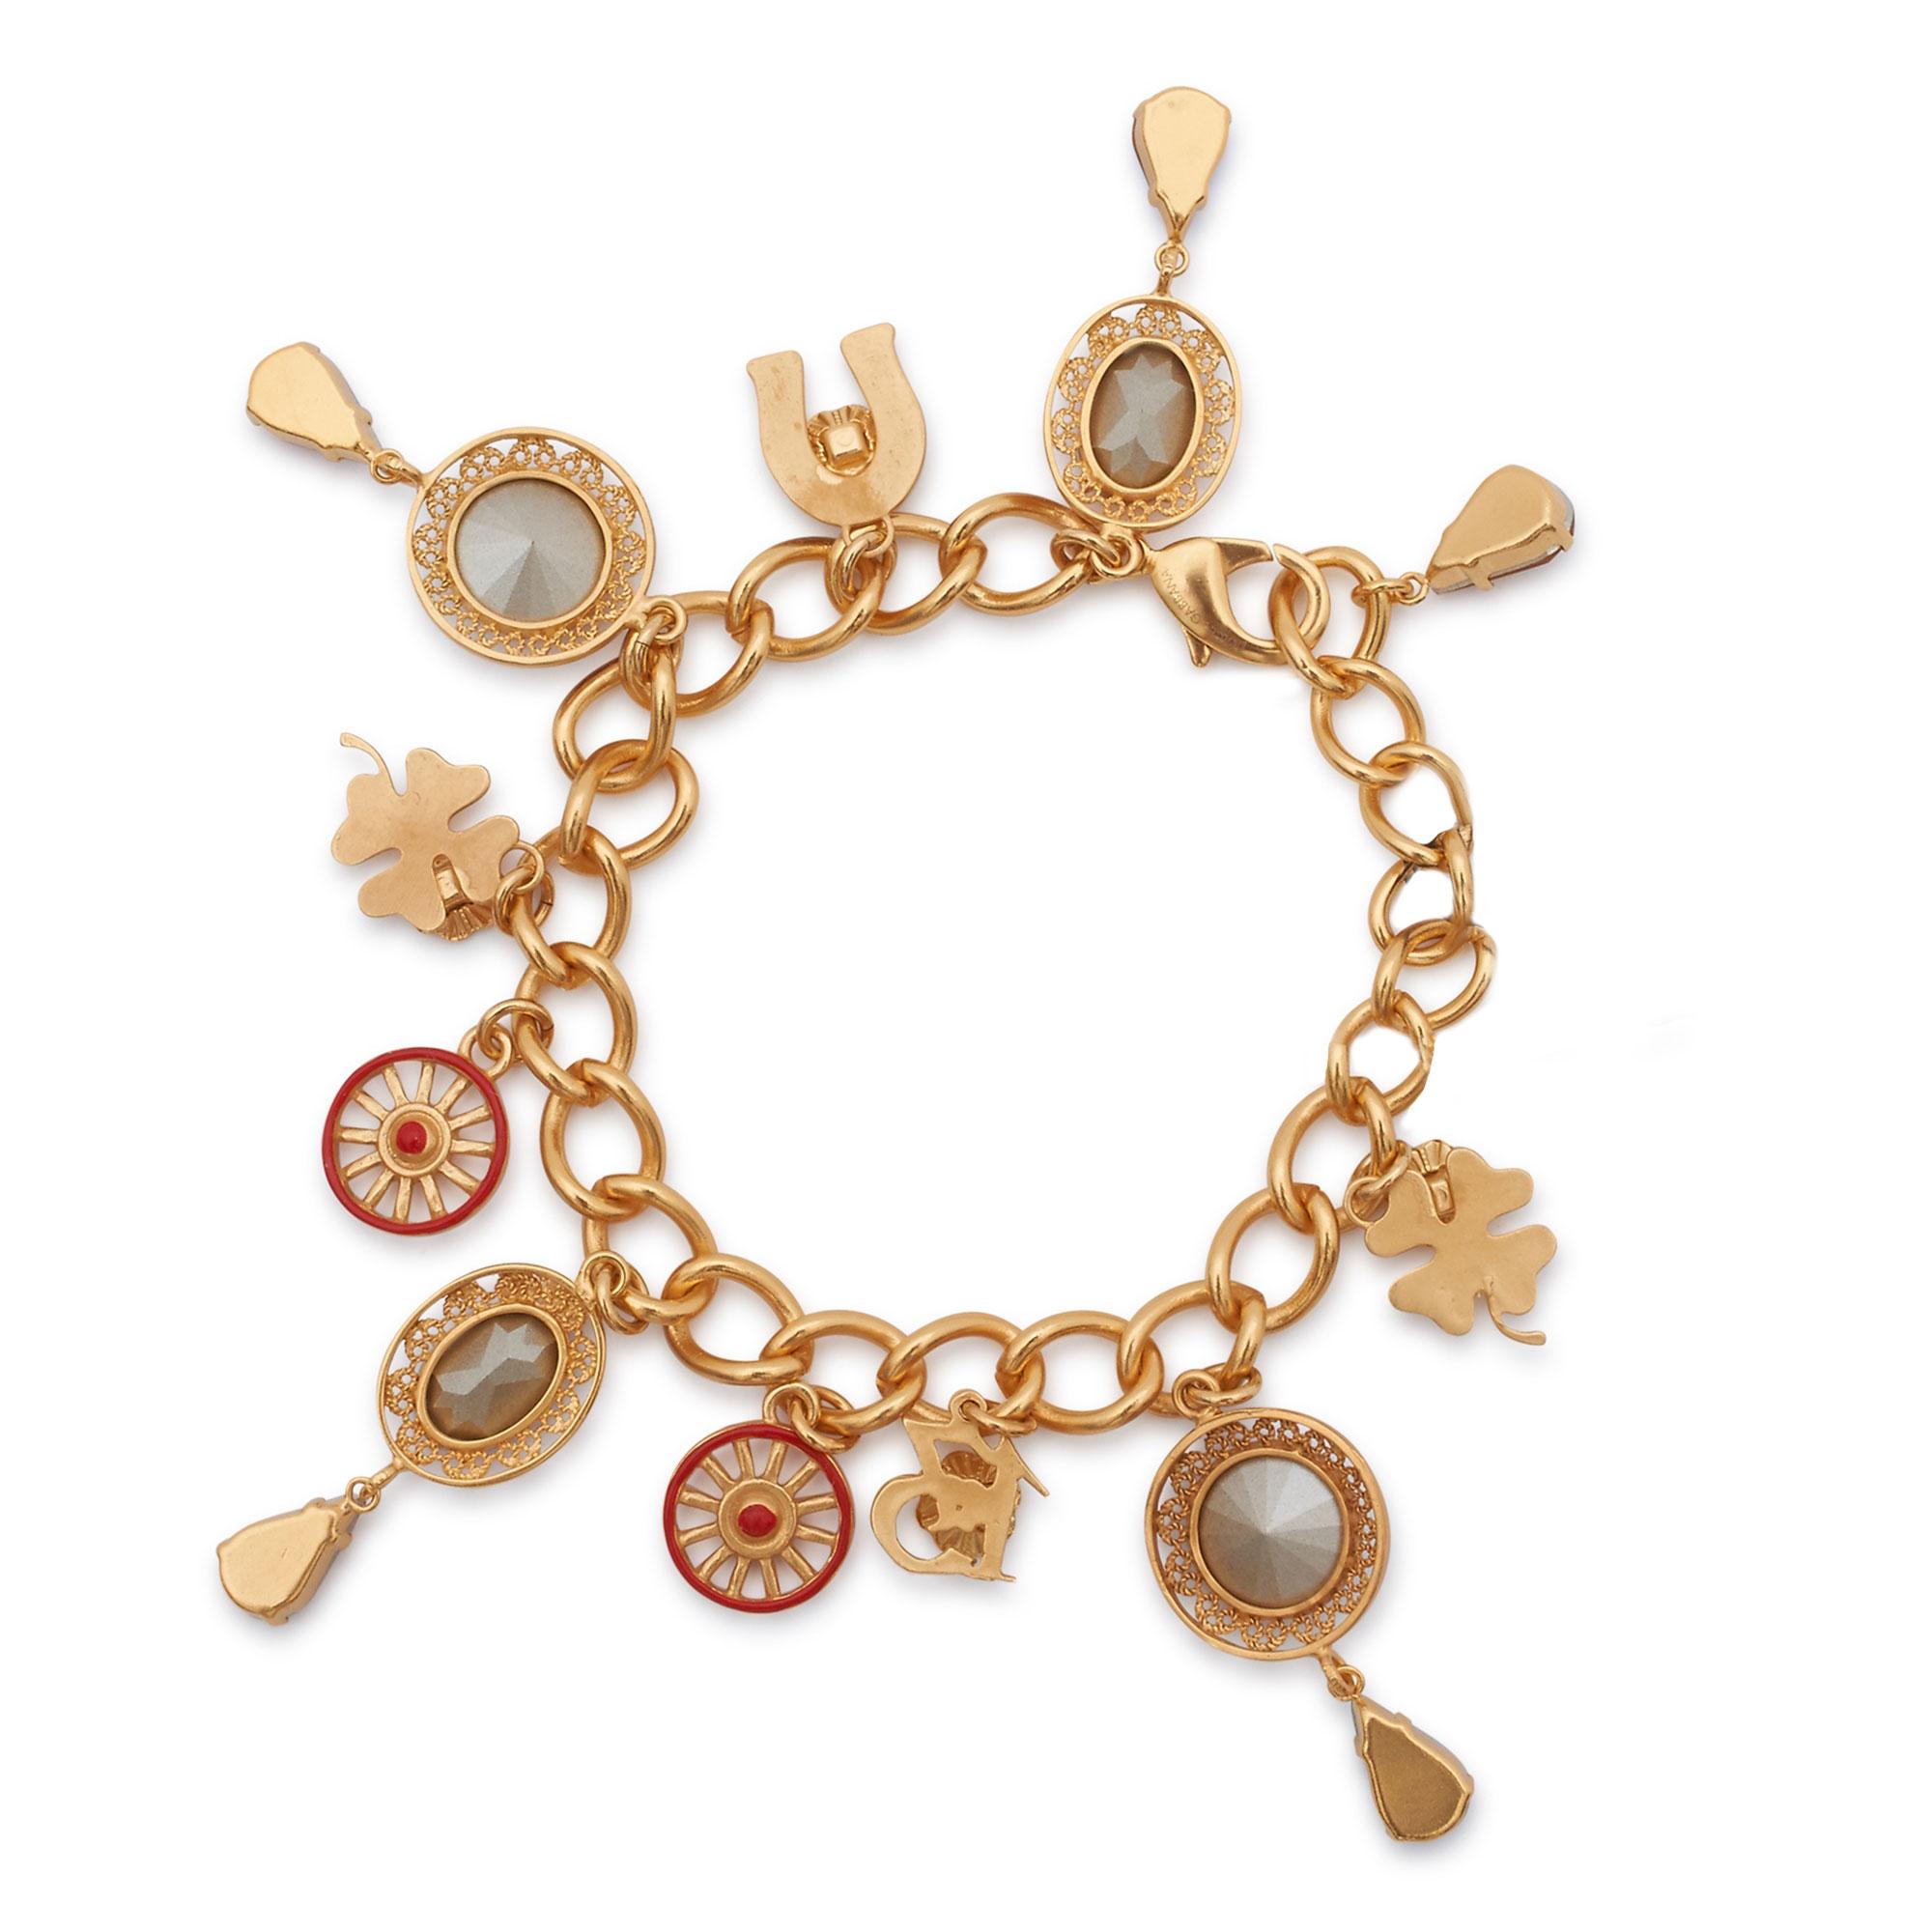 Lyst - Dolce & Gabbana Bracelet With Charms